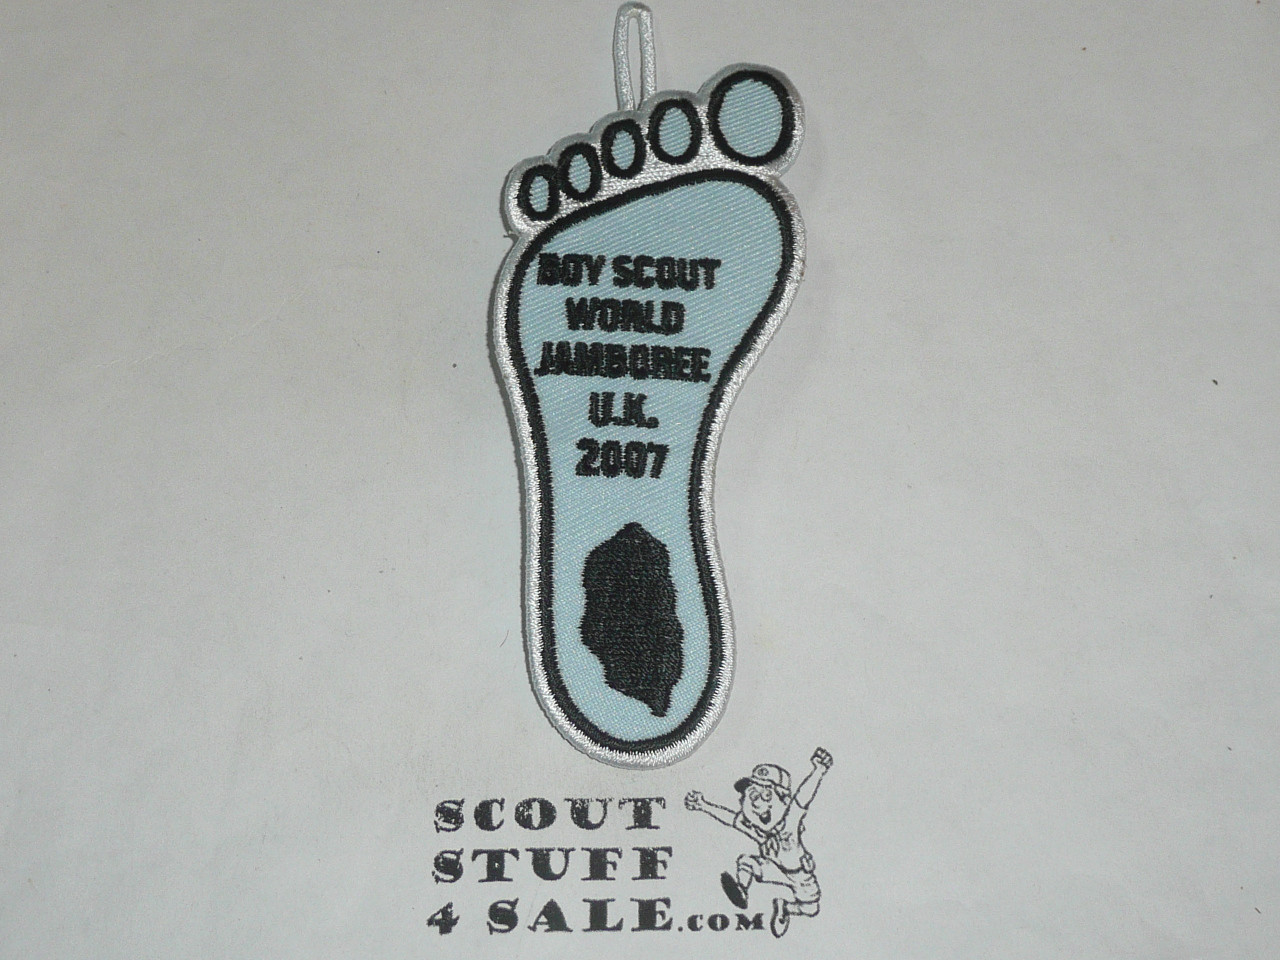 2007 Boy Scout World Jamboree United Kingdom Contingent Patch